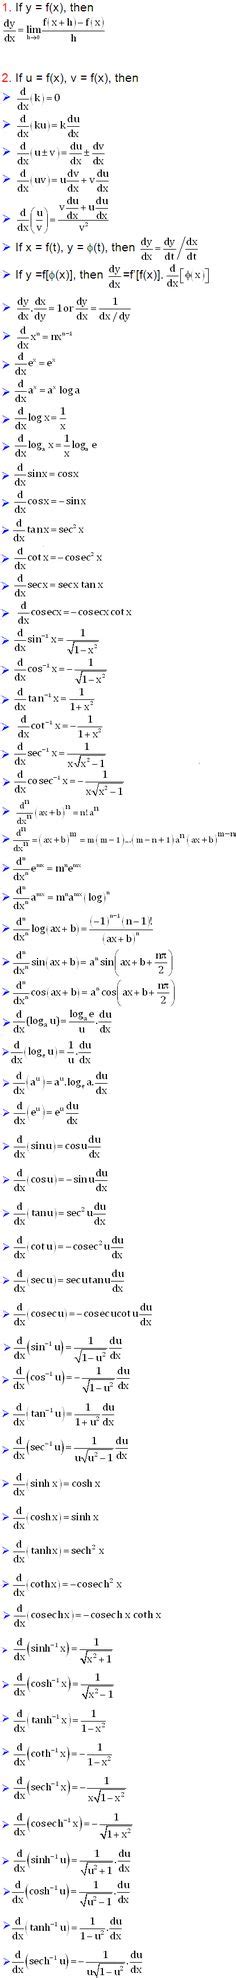 differentiation formulae math formulas mathematics formulas basic math formulas ap